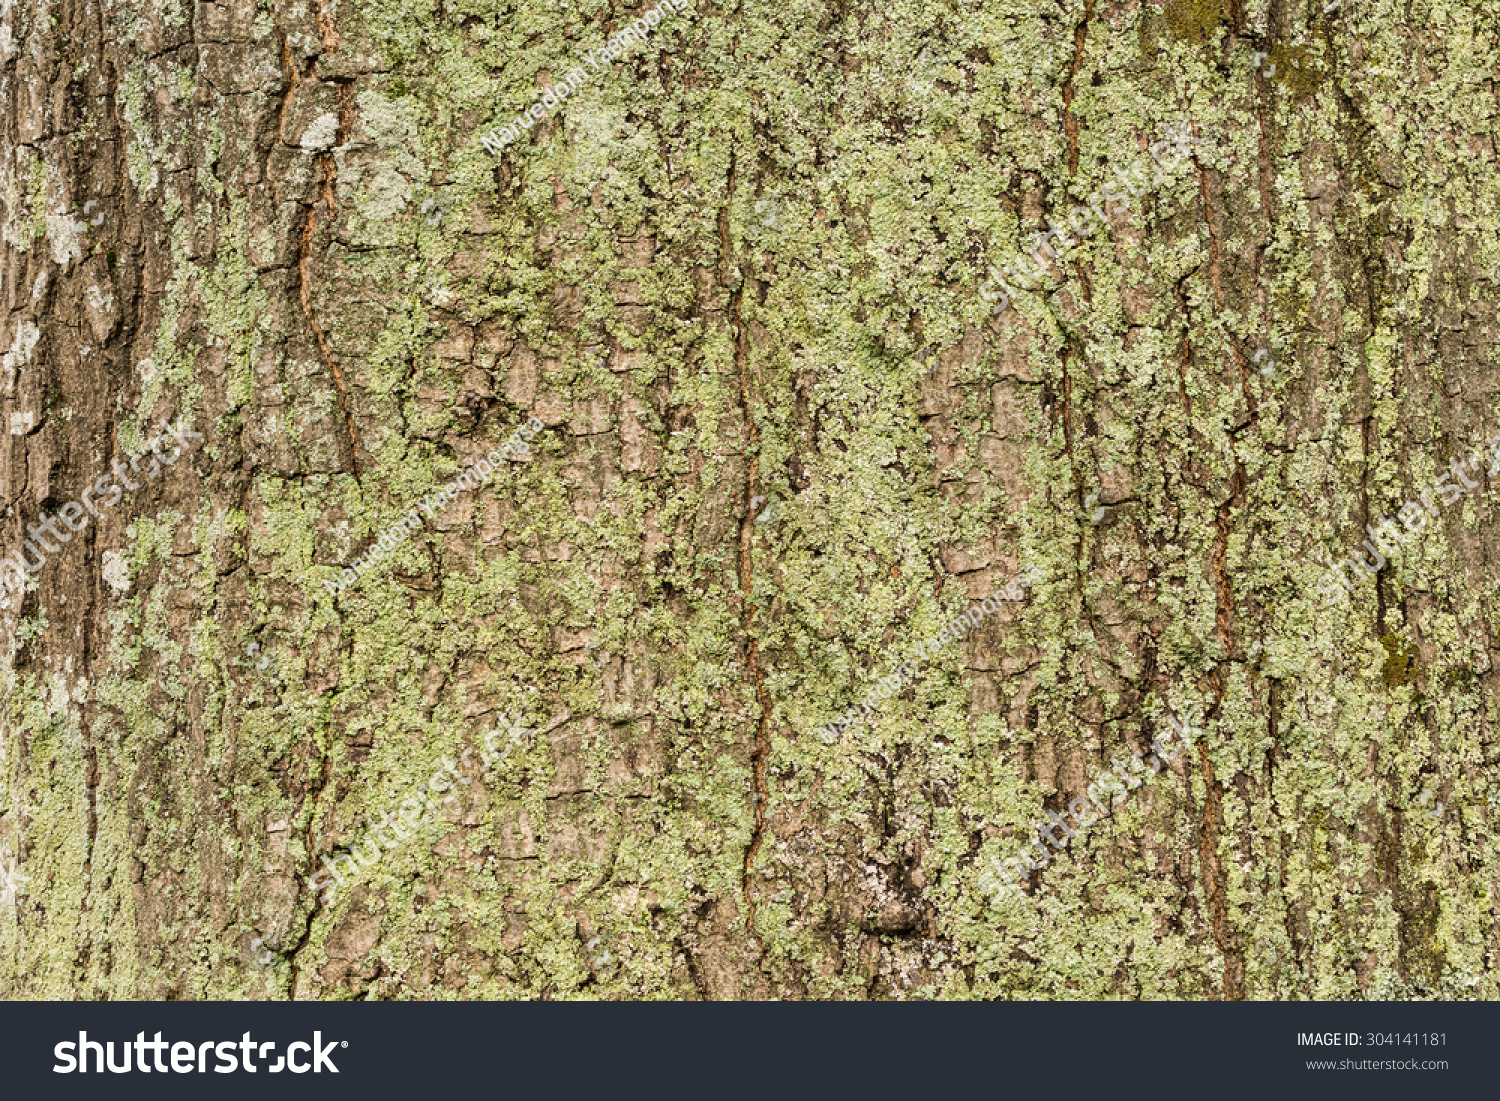 tree Bark texture background pattern #304141181